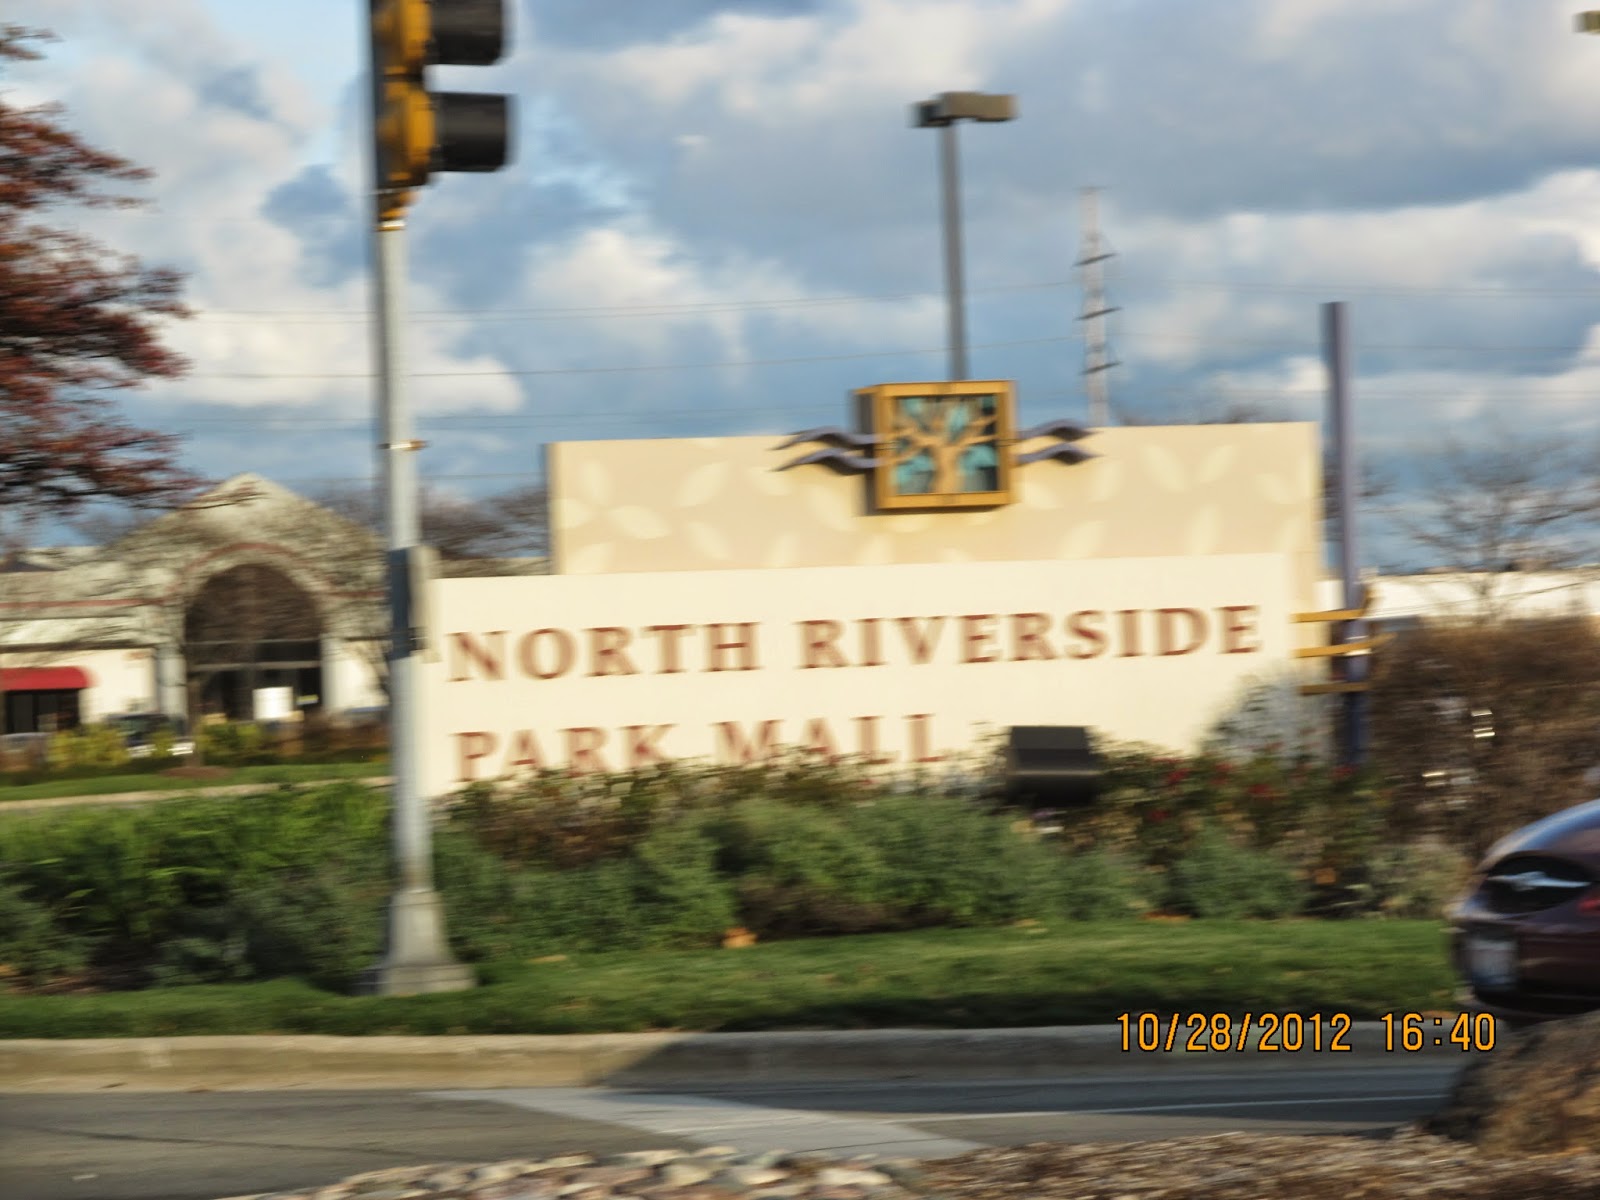 Lids — North Riverside Park Mall